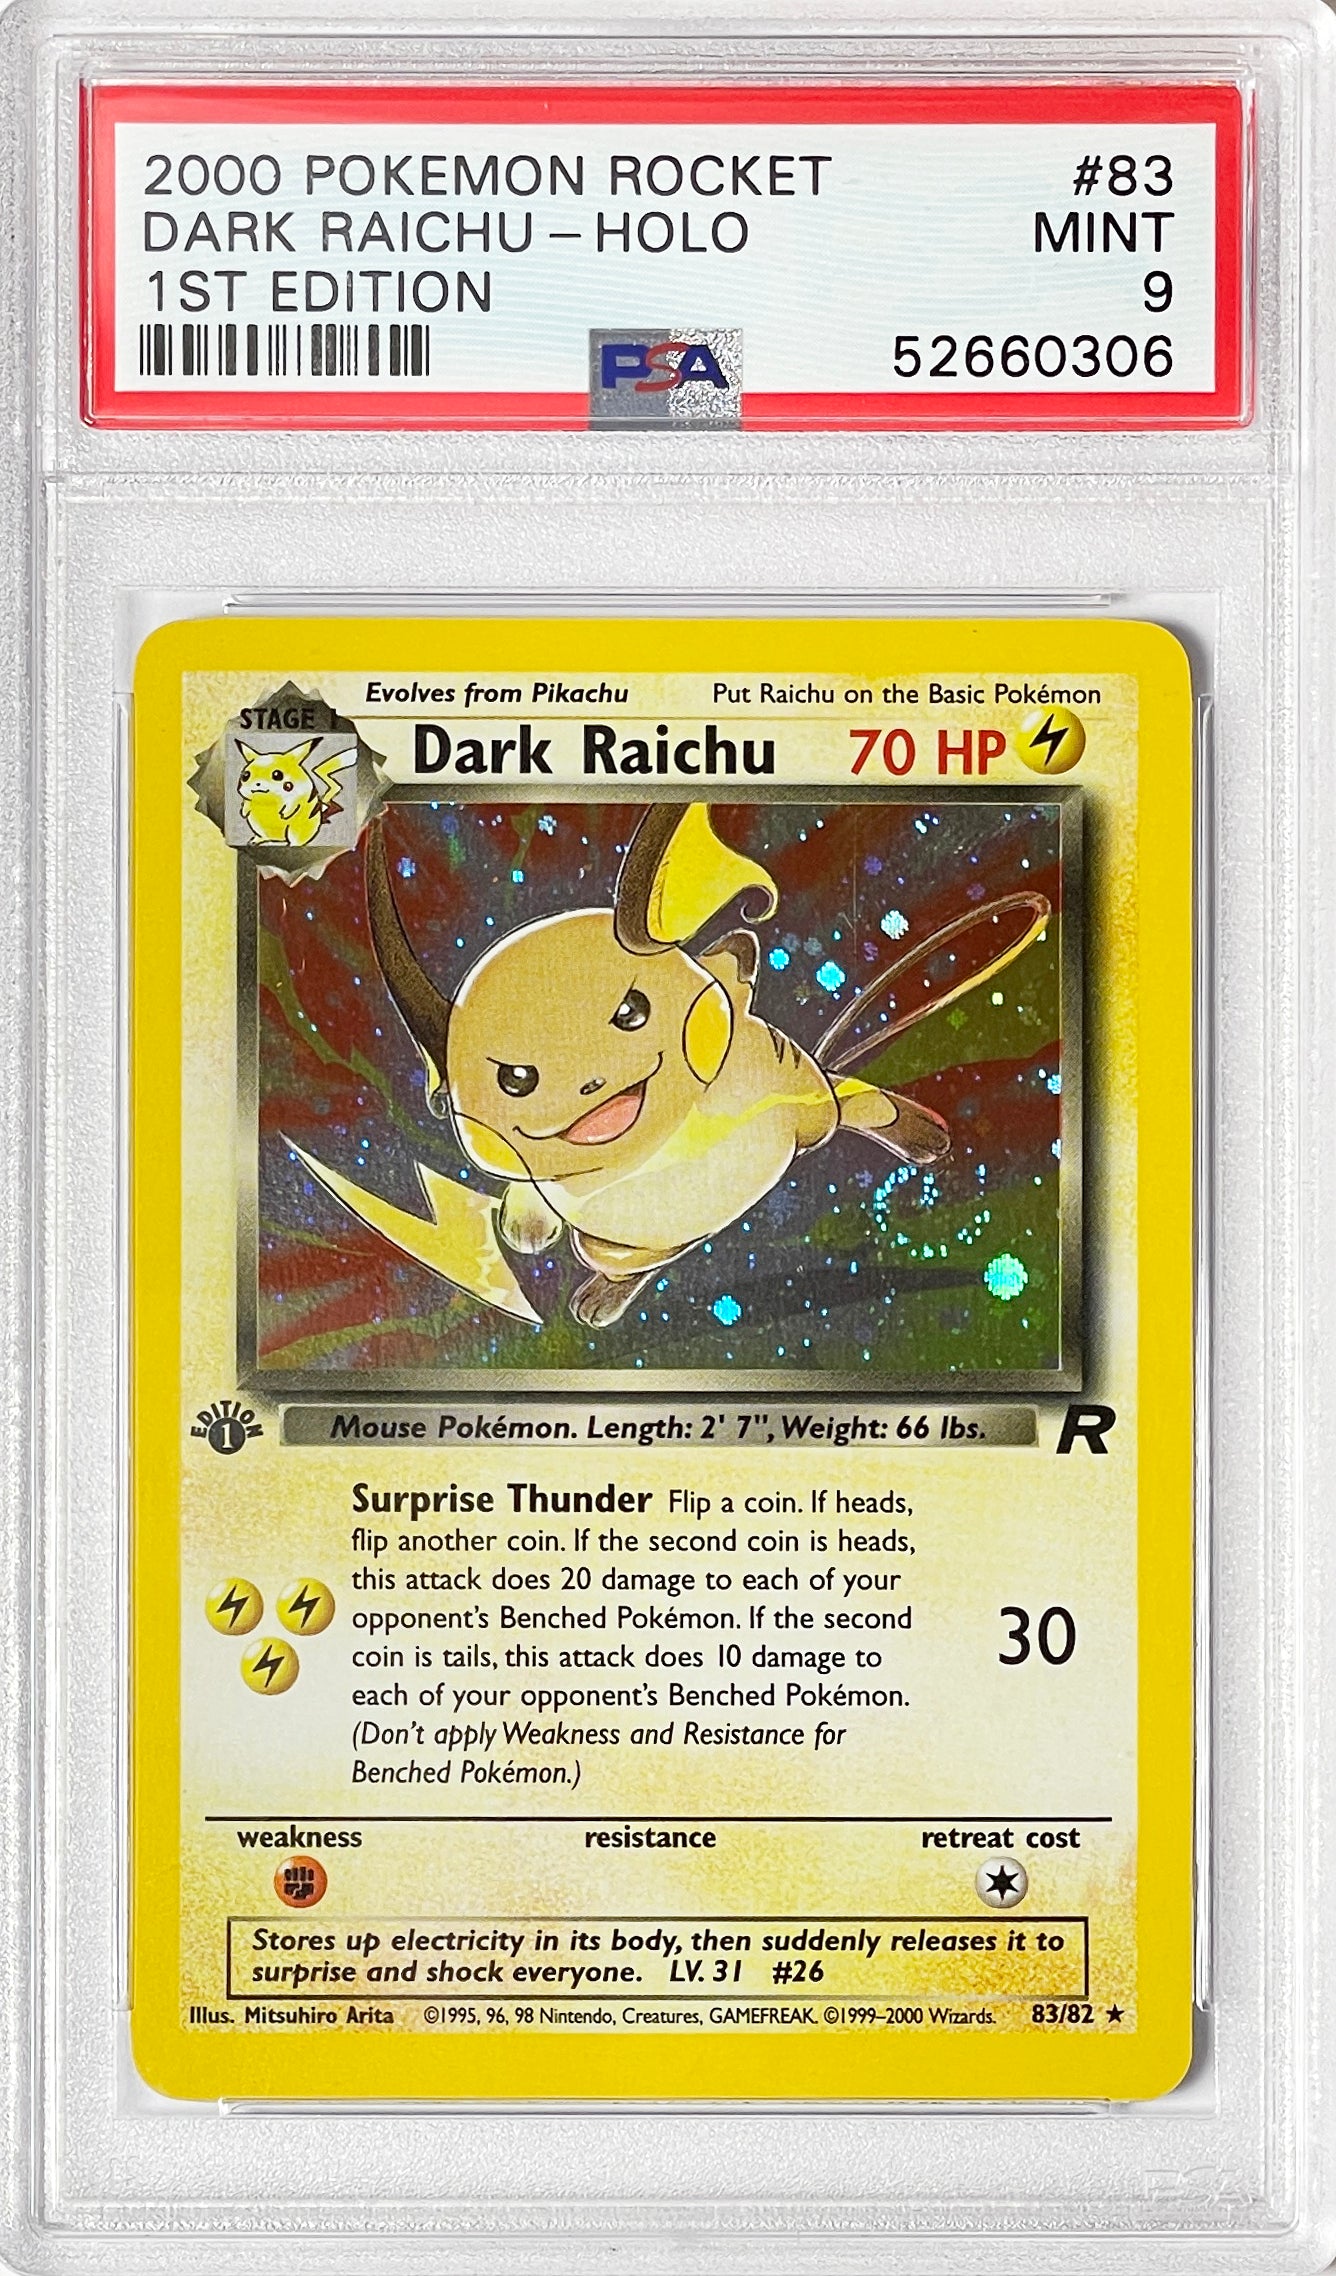 Pokemon 2000 Rocket 1st Edition Dark Raichu Holo Swirl 83/82 PSA 9 MINT (Graded Card)